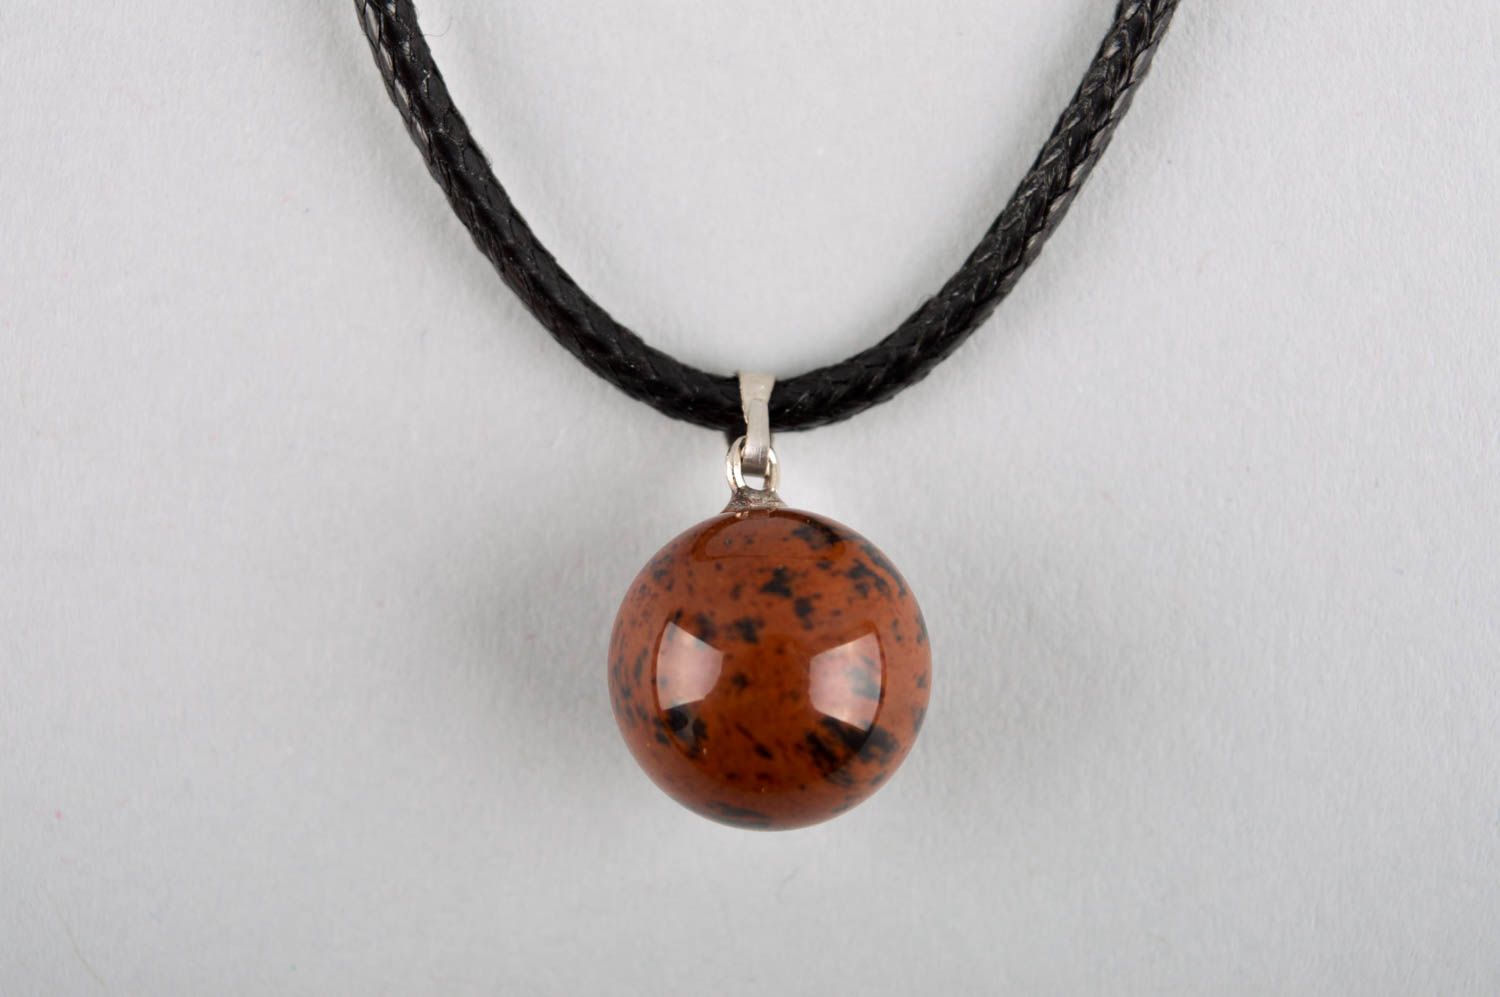 Handmade cord pendant with natural stone stylish jewelry handmade accessories  photo 1